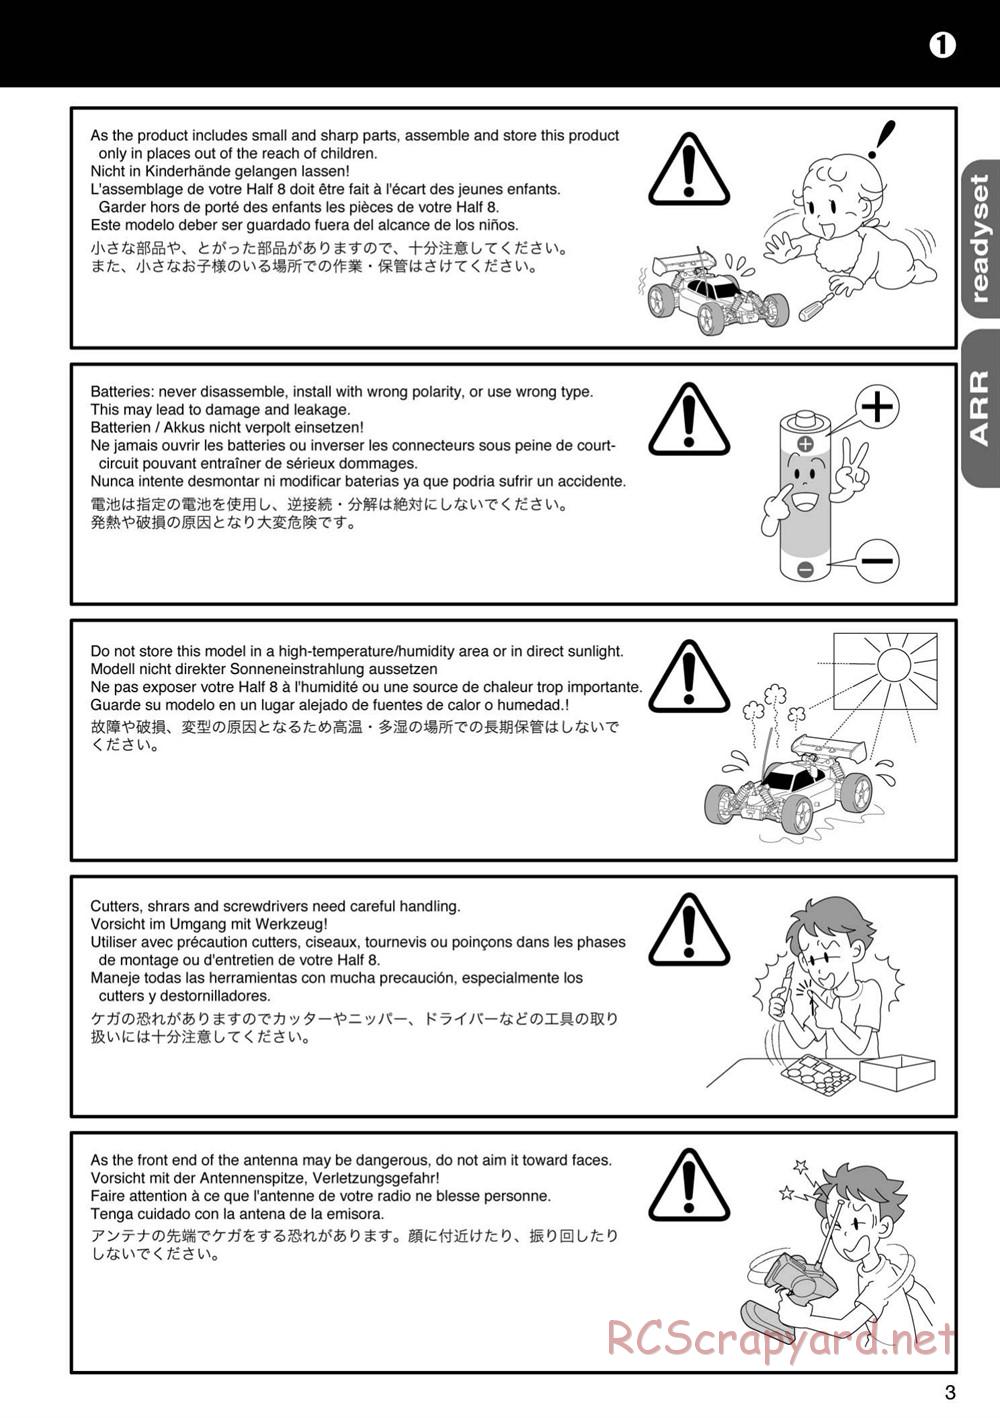 Kyosho - Mini Inferno 09 - Manual - Page 3